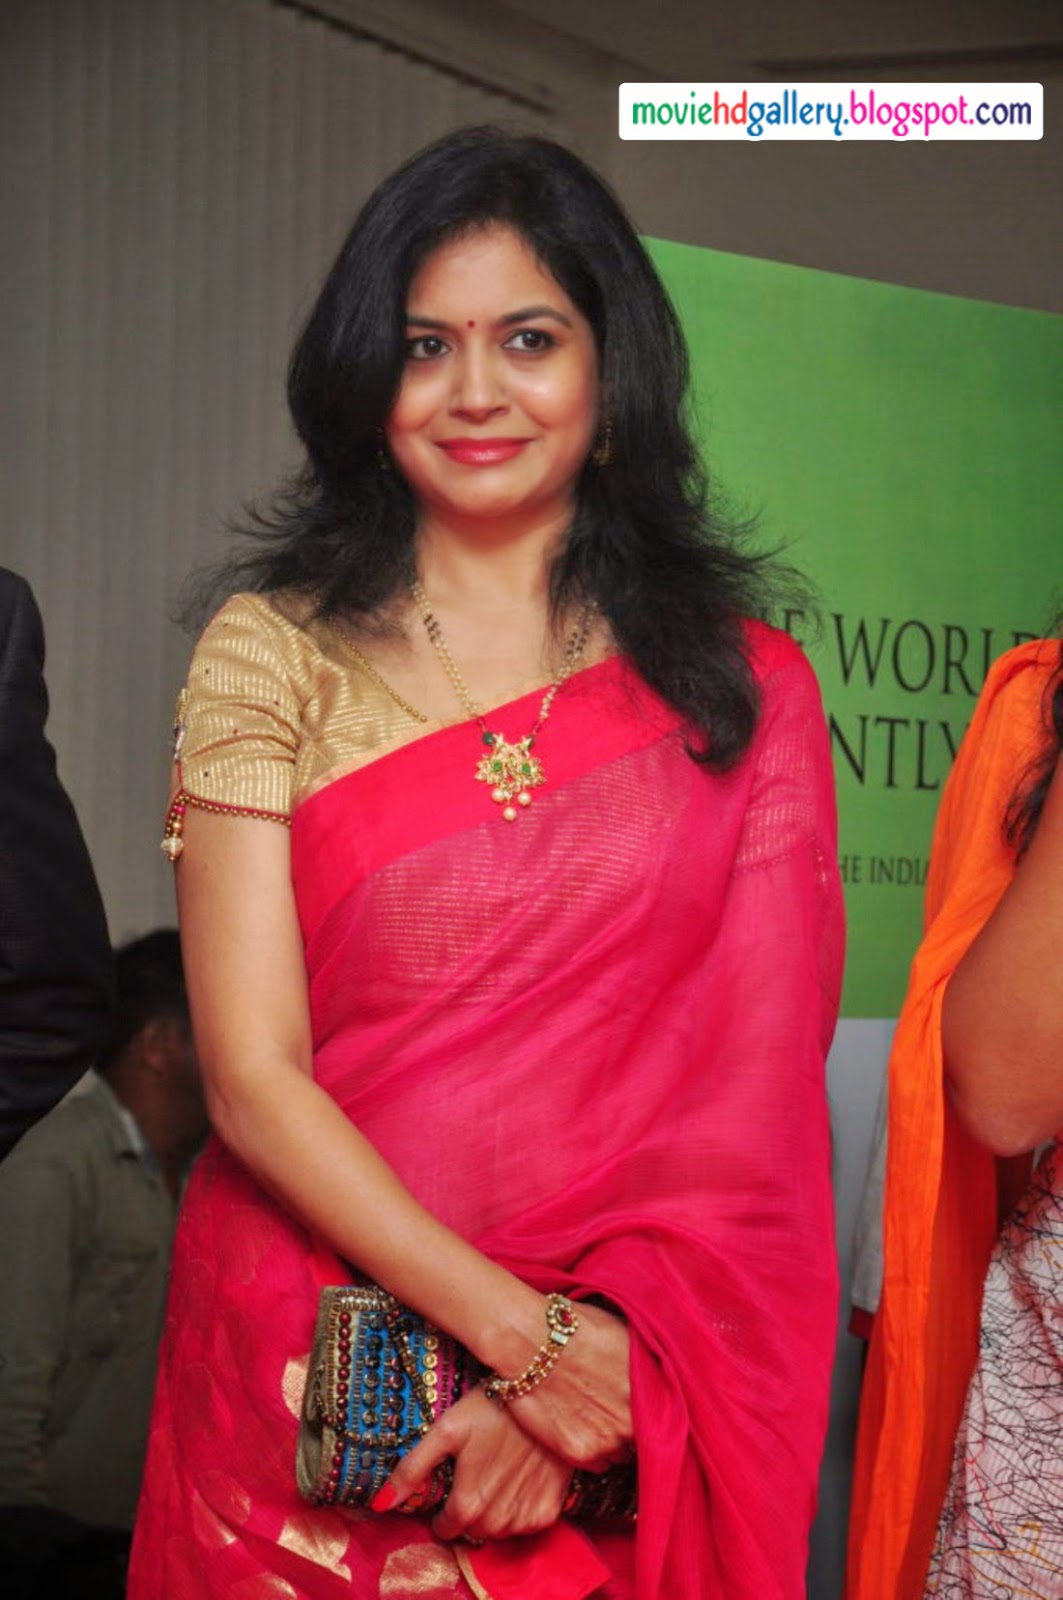 moviehdgallery: Singer Sunitha beautiful photos